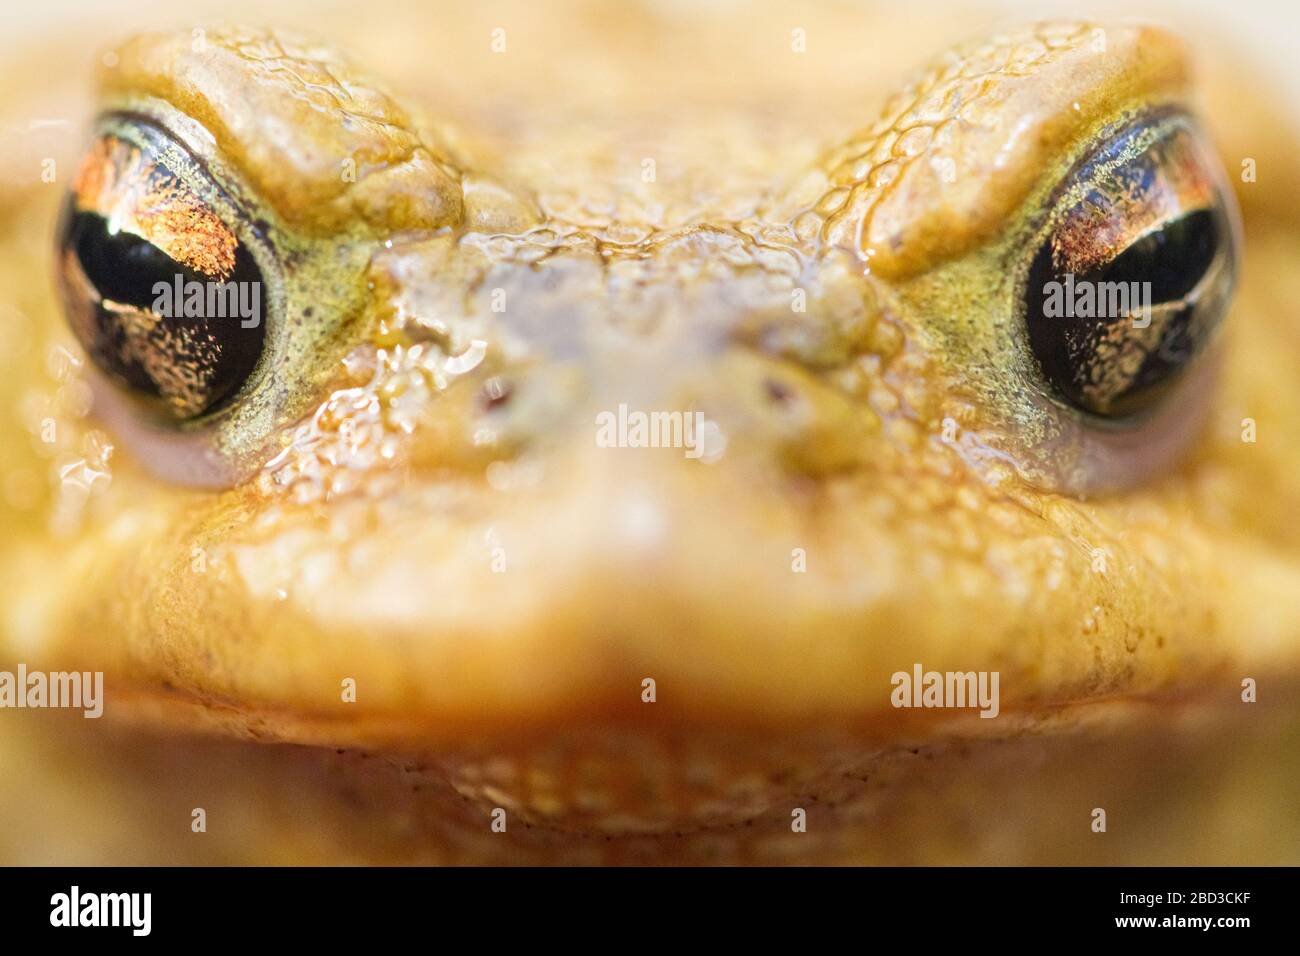 Ccommon toad (bufo bufo) close portrait. Stock Photo